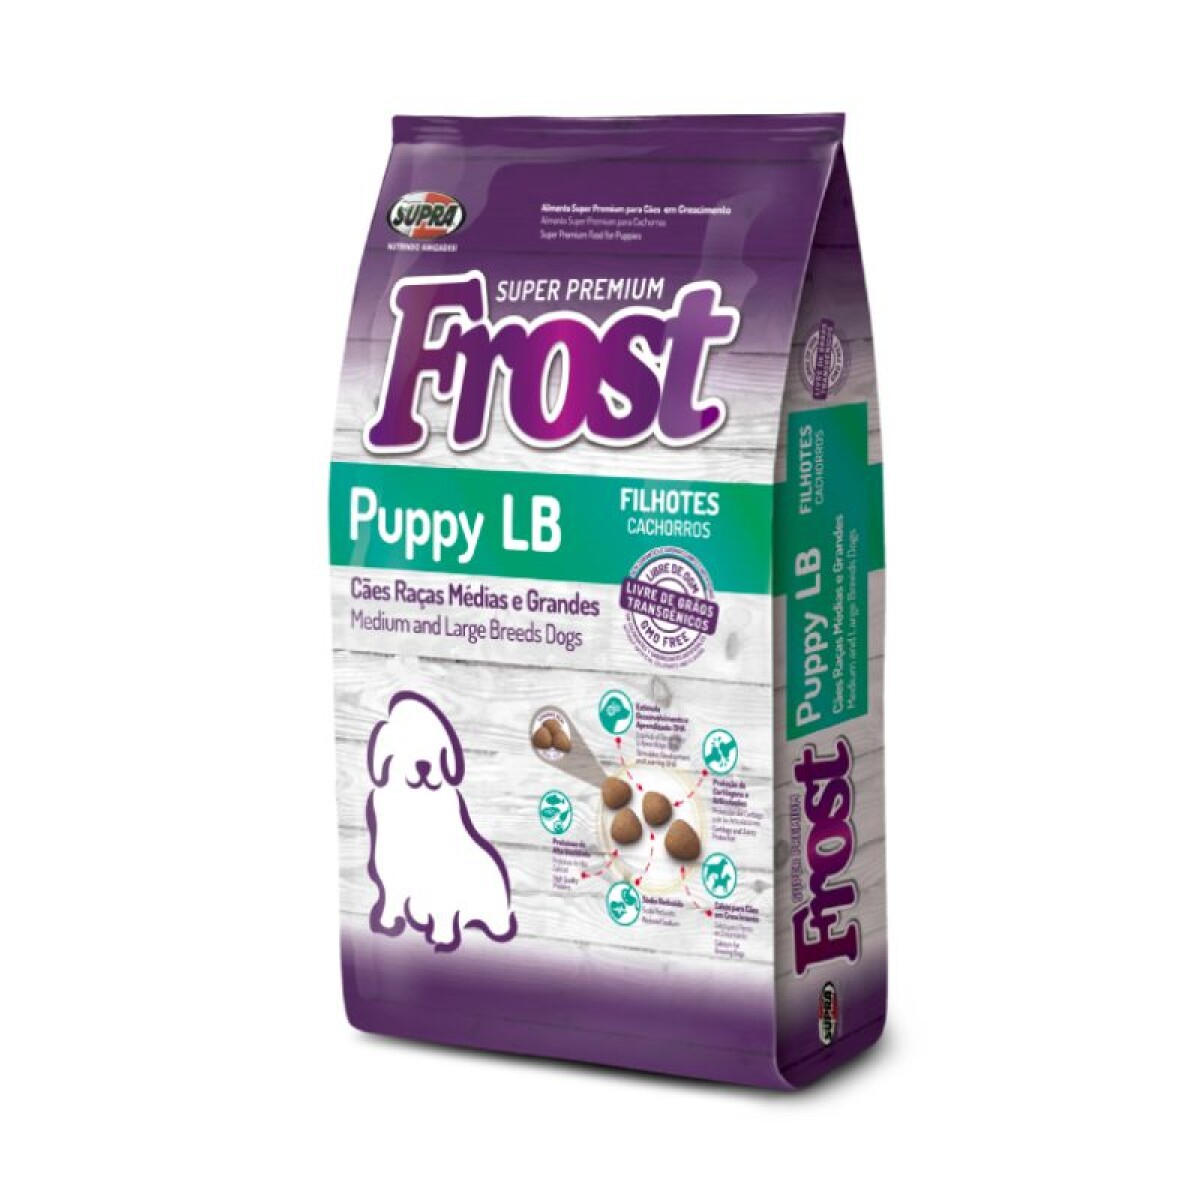 FROST PUPPY LB 15 KG - Frost Puppy Lb 15 Kg 